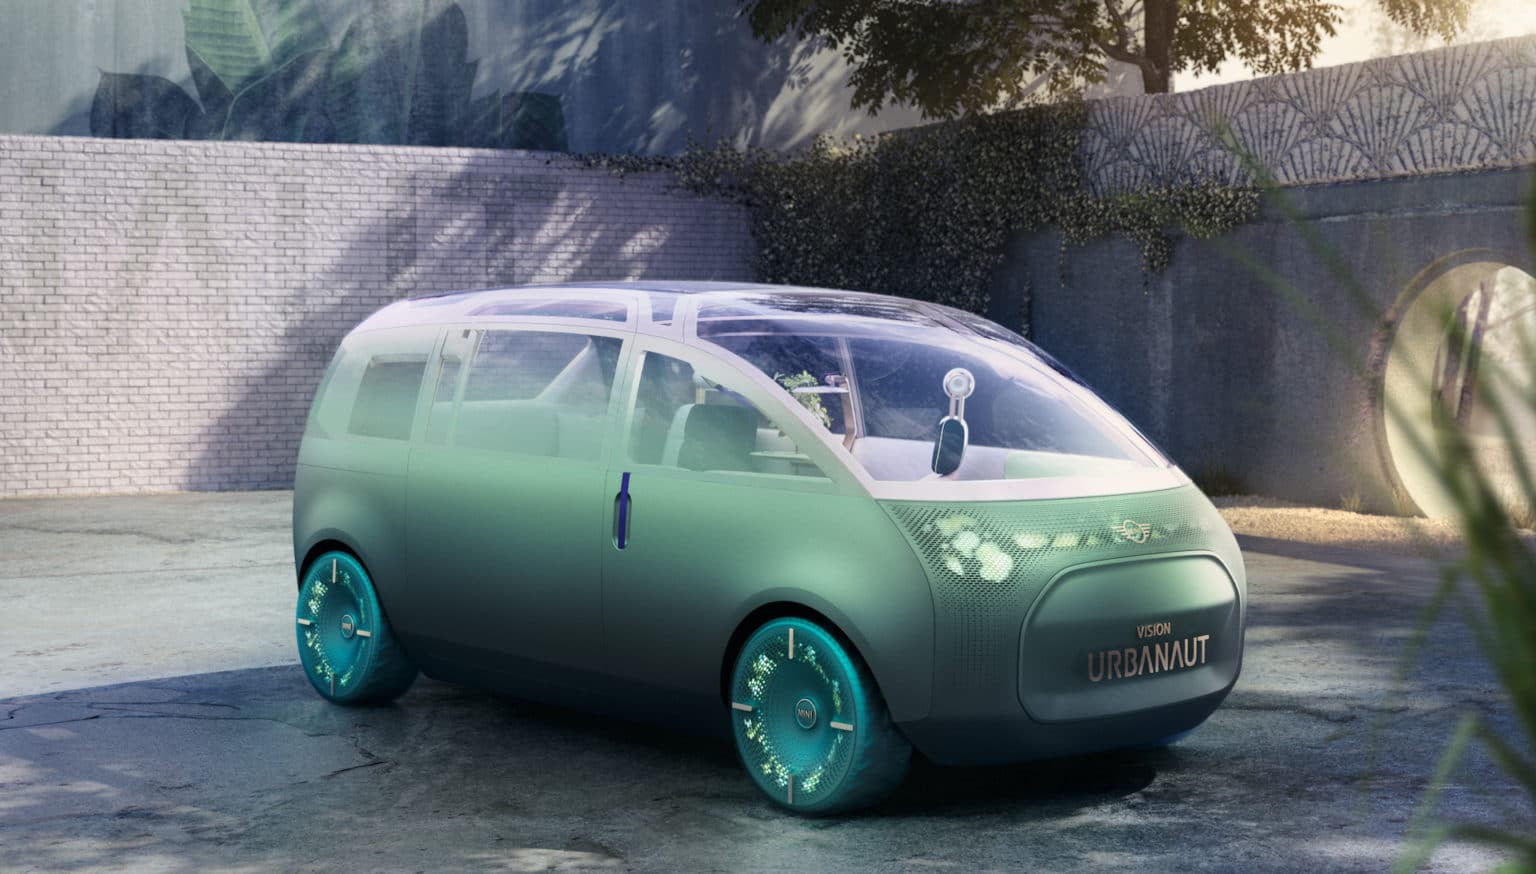 BMW-MINI-Elektroauto-Zukunft-Vision-Urbanaut-Aufmacher